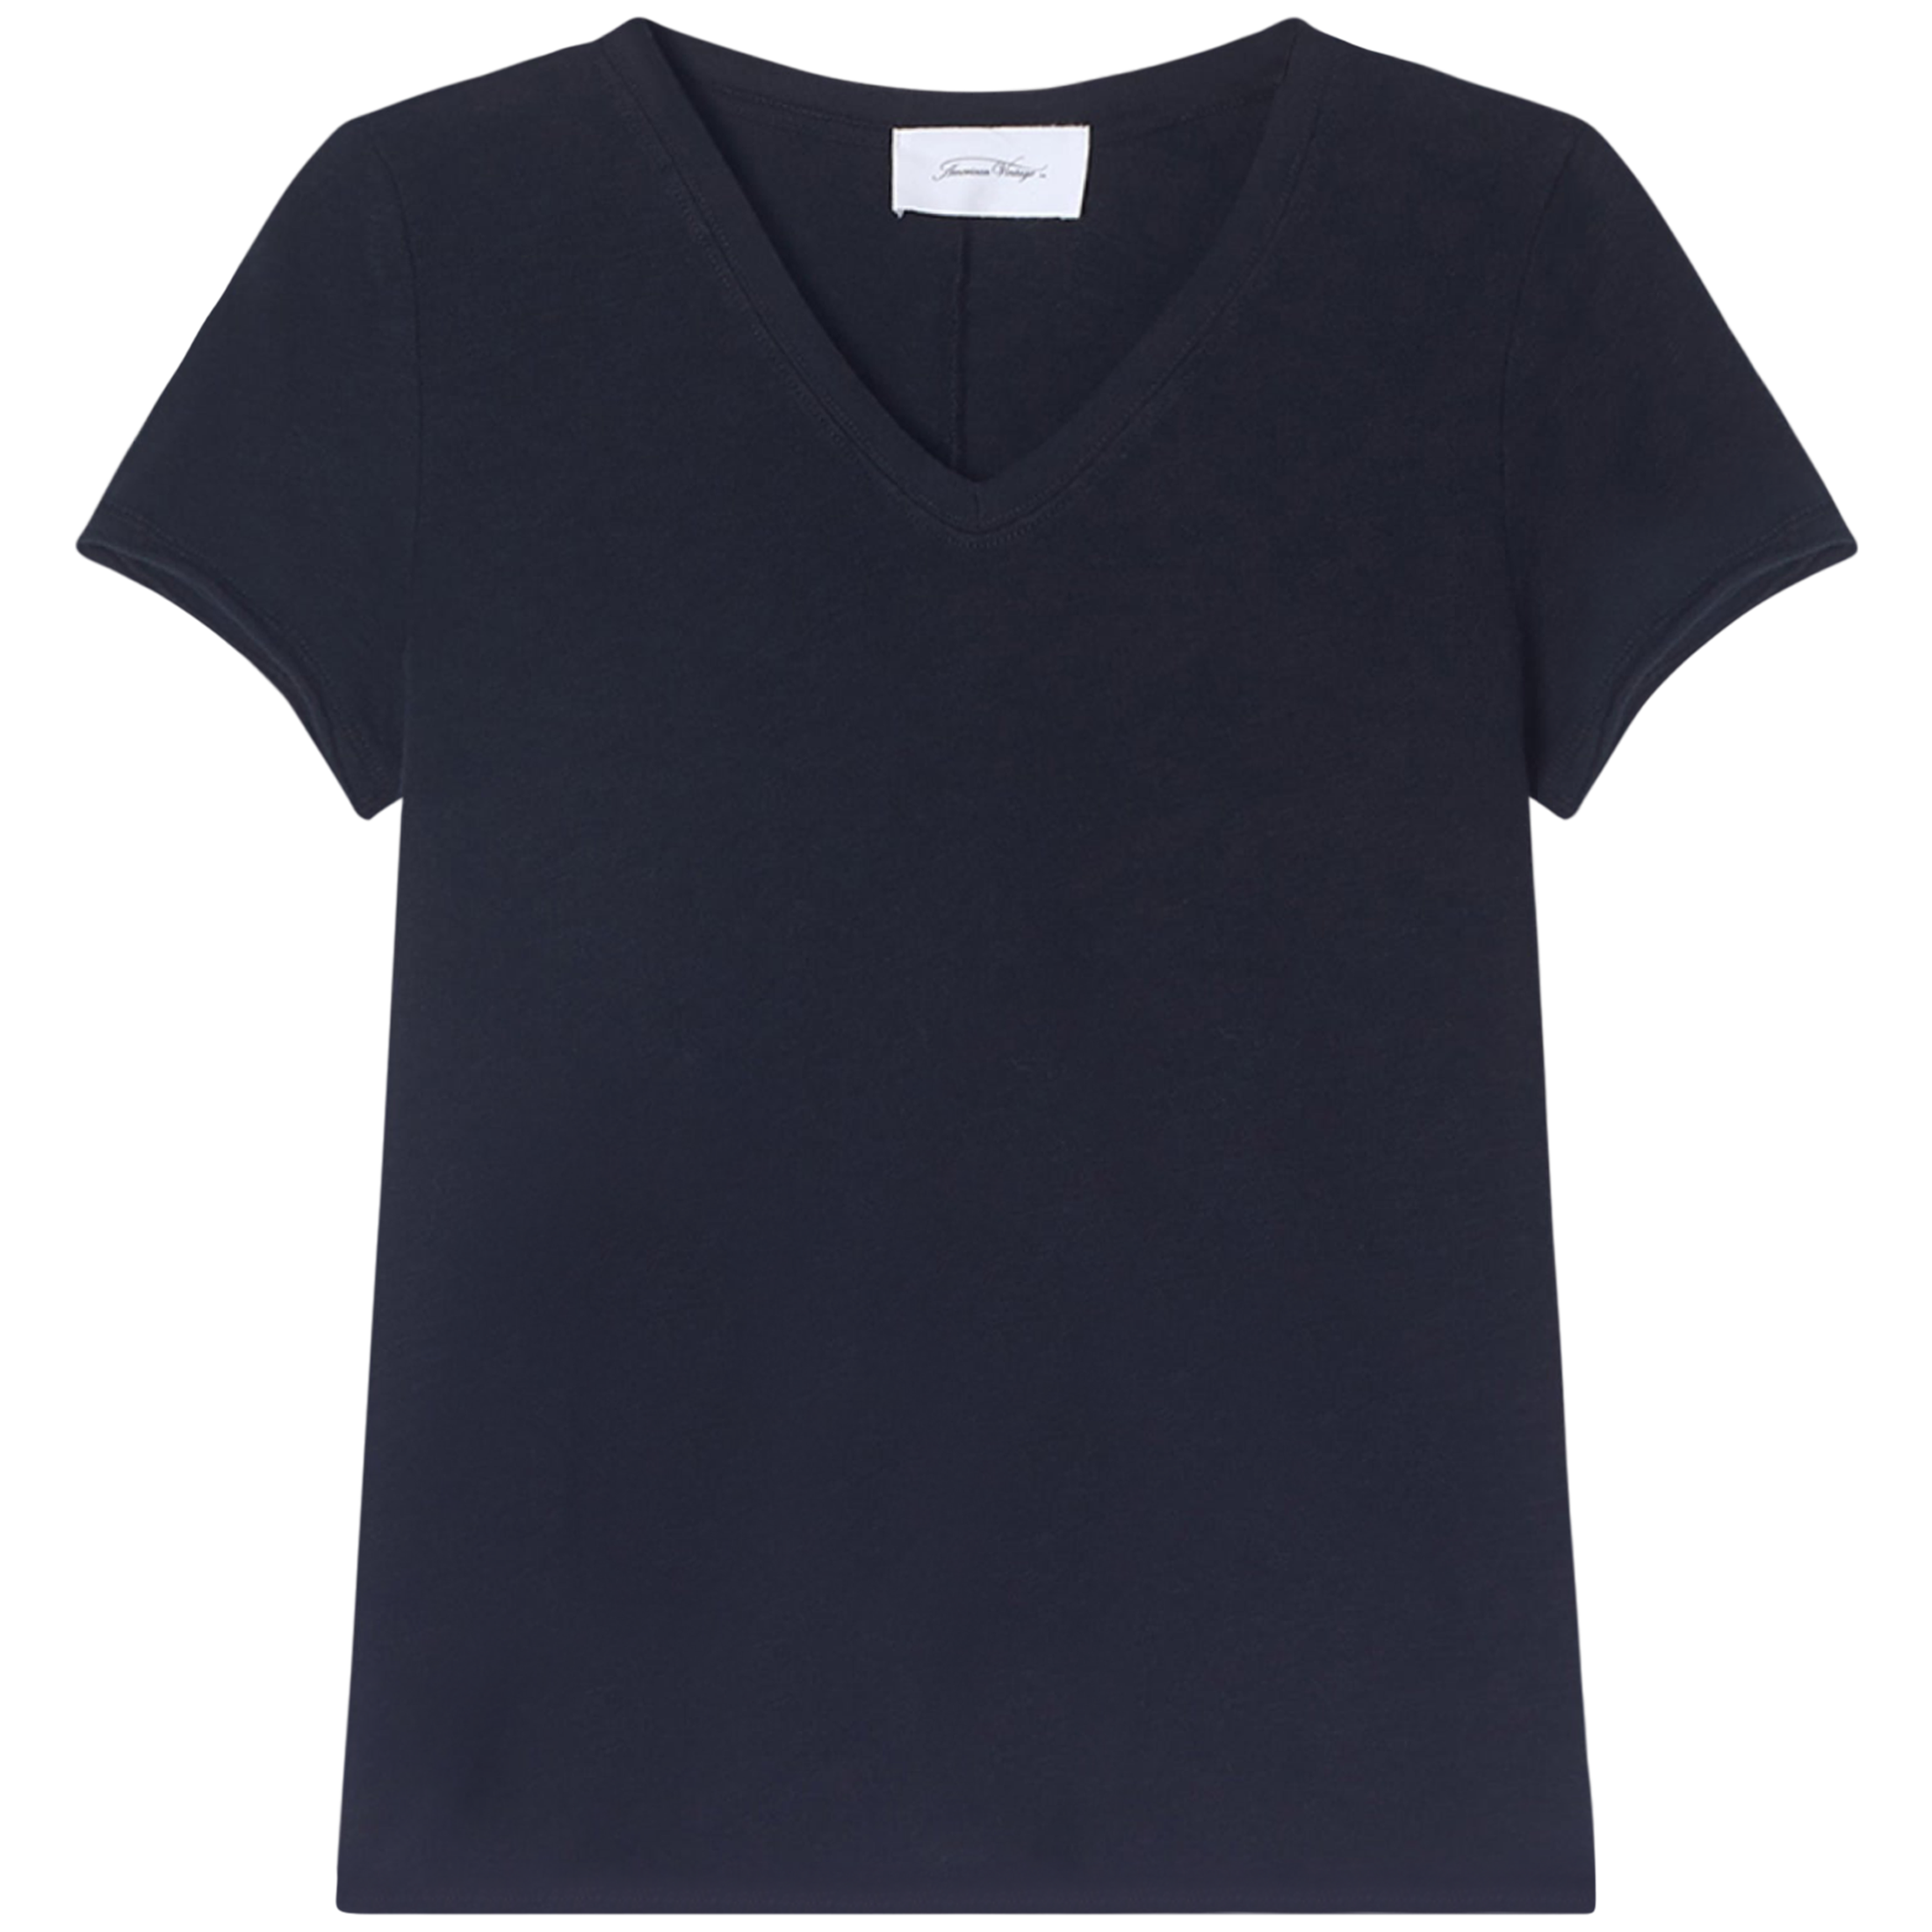 Sonoma T-shirt - Black